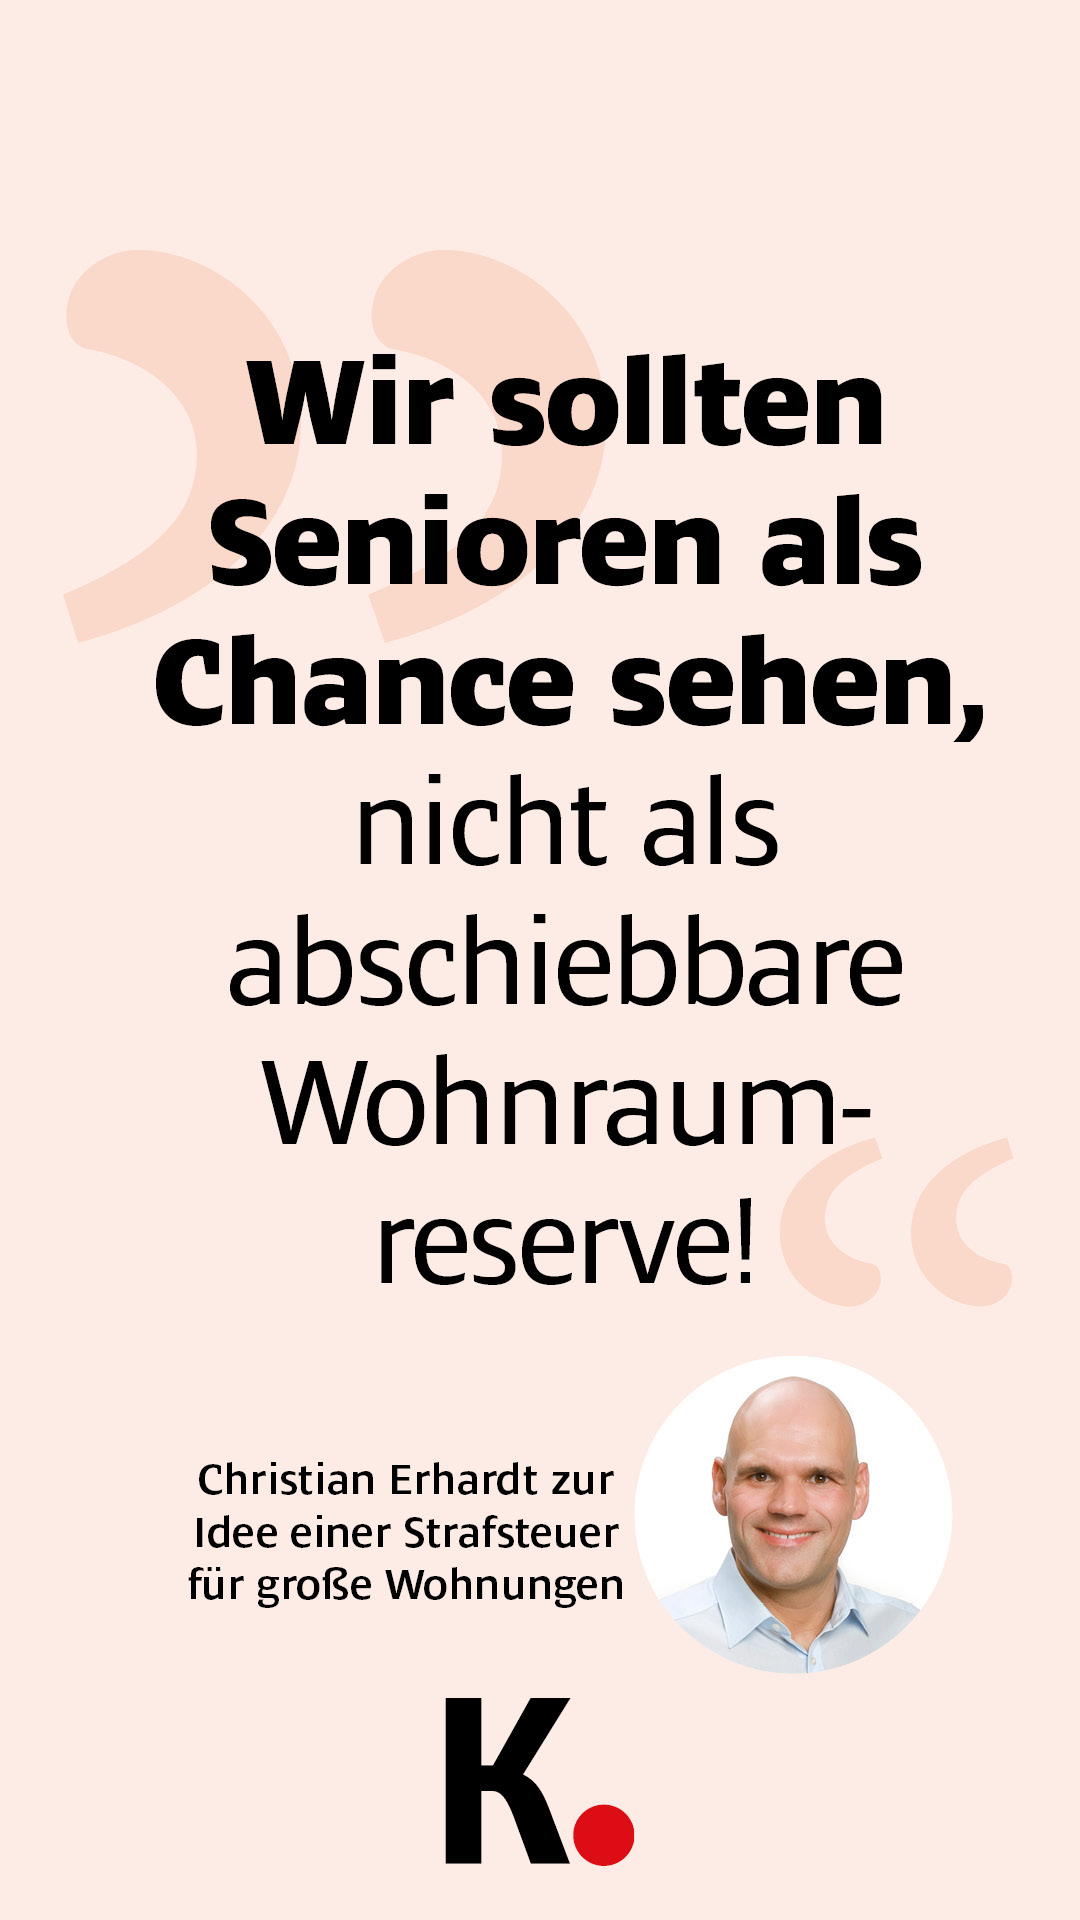 Christian Erhardt